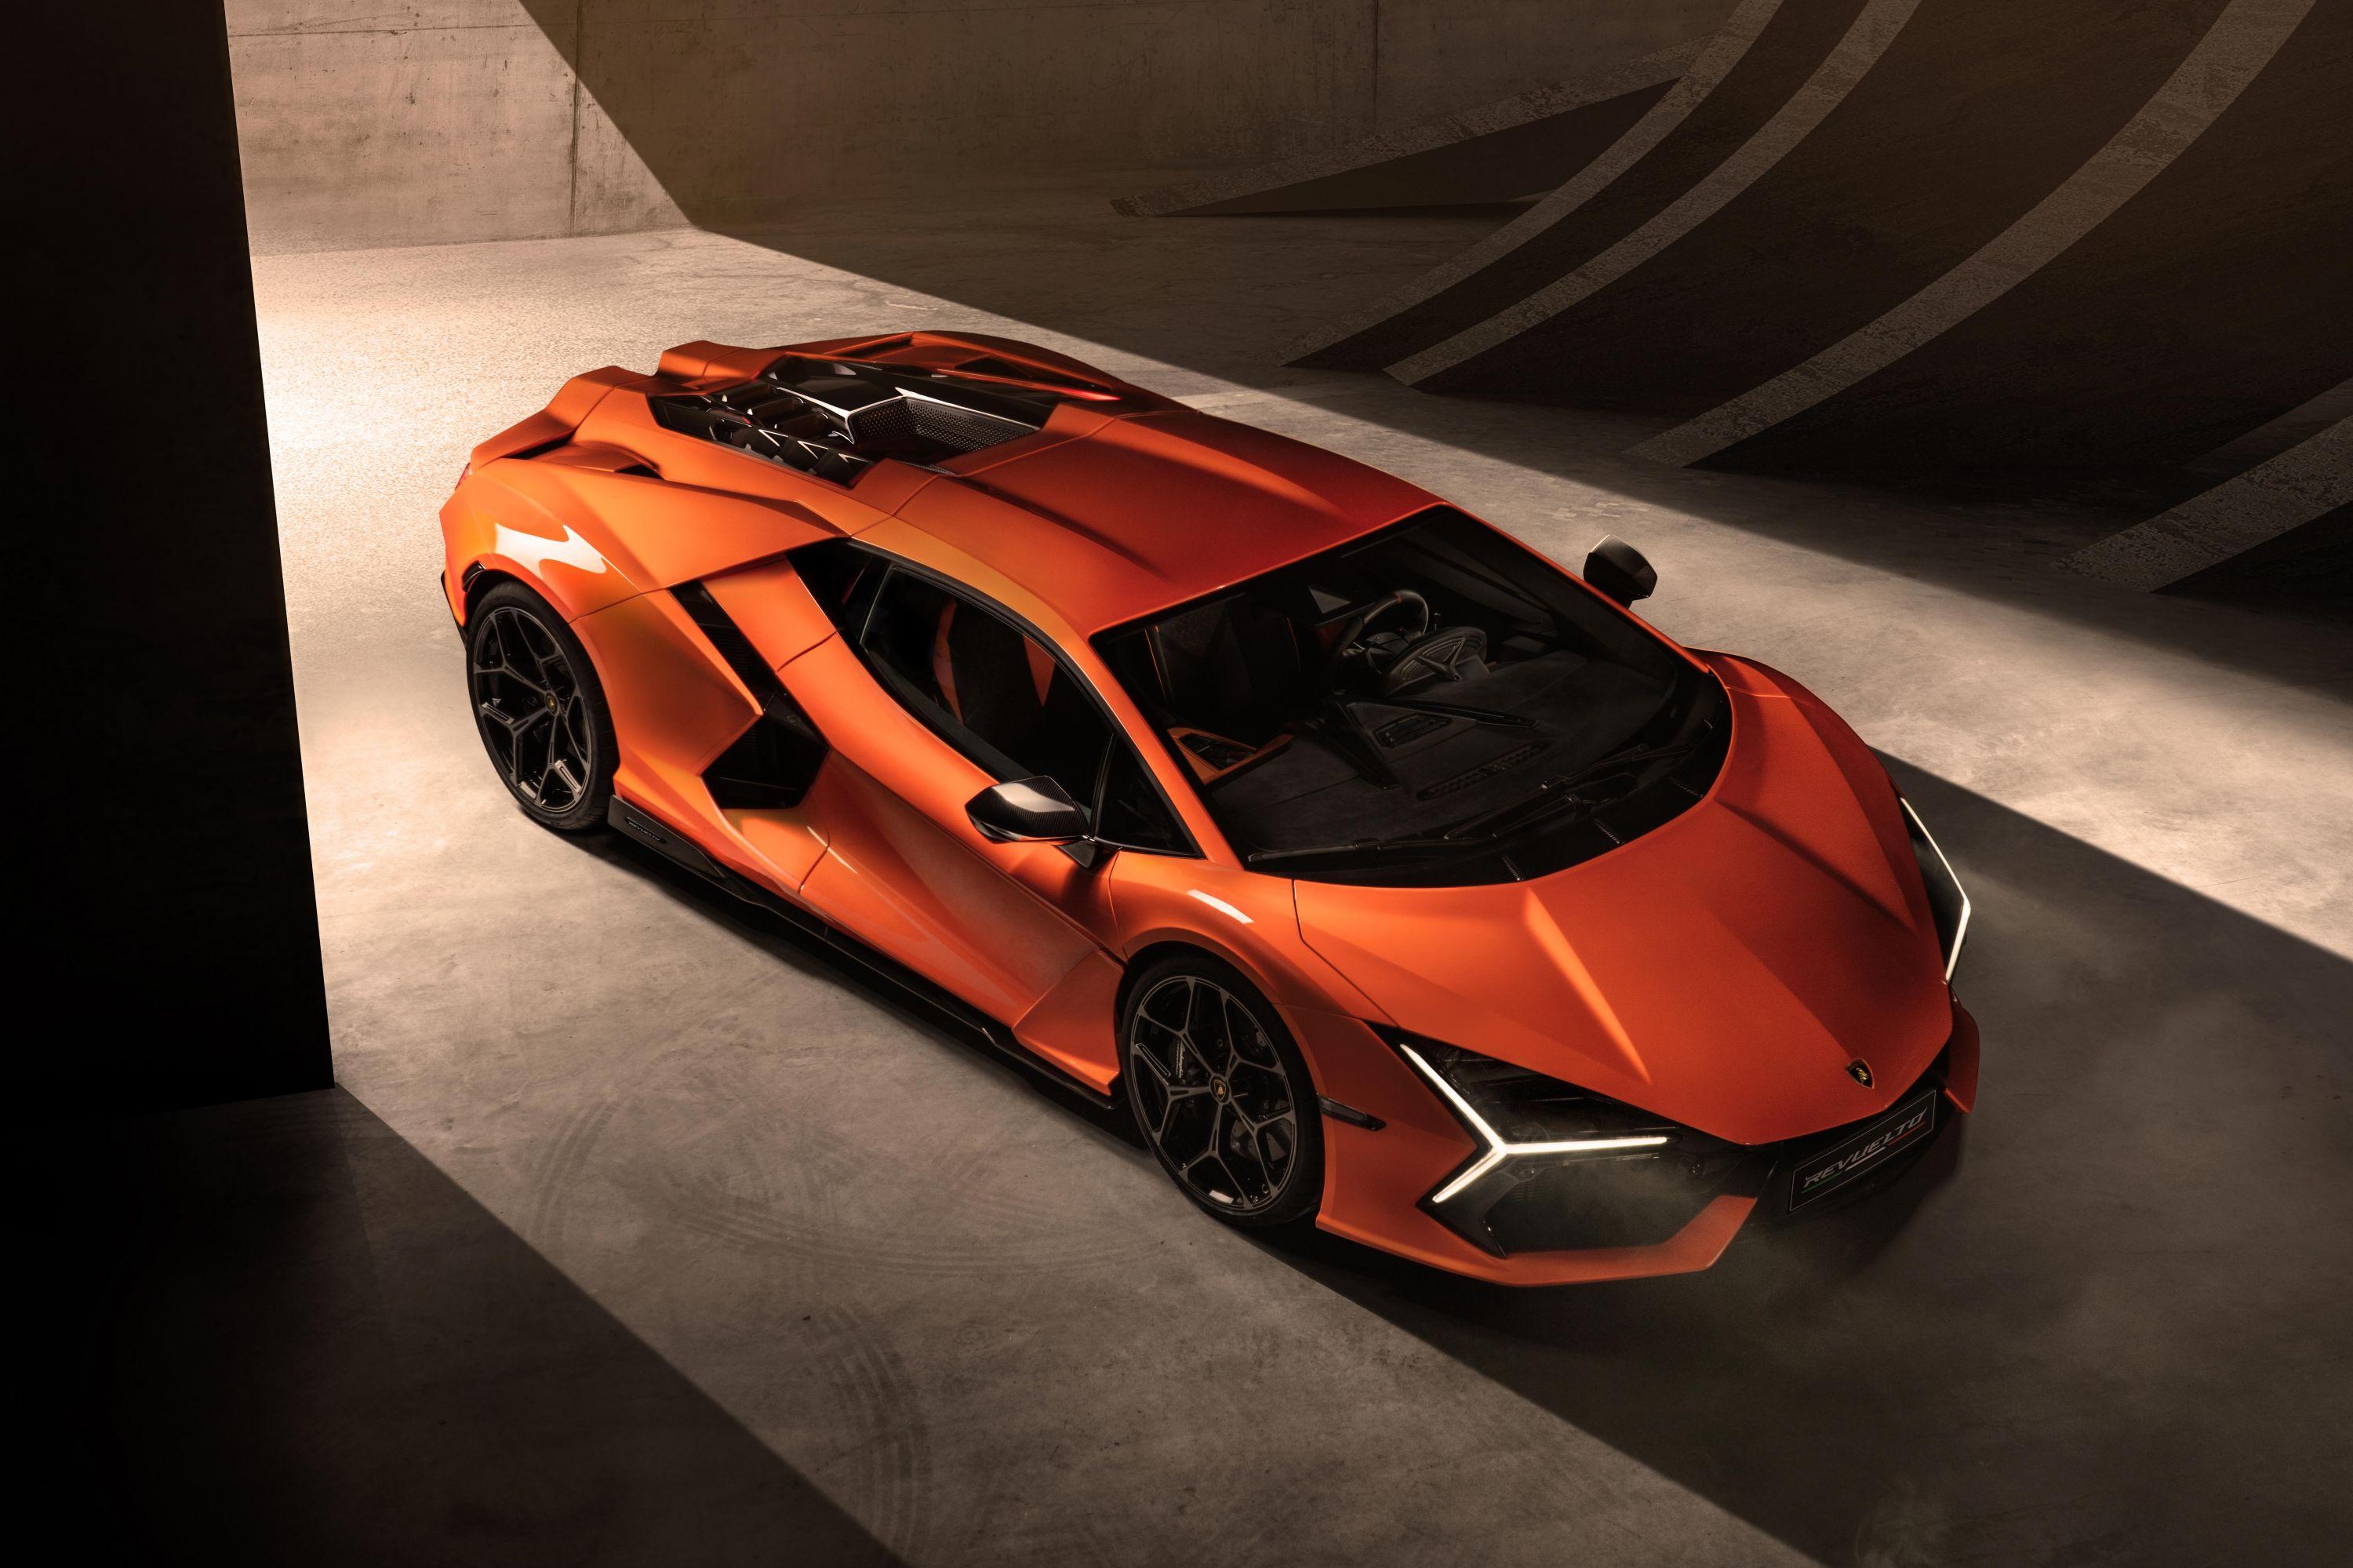 Lamborghini S Evs Could Be More Engaging Than Its Petrol Cars